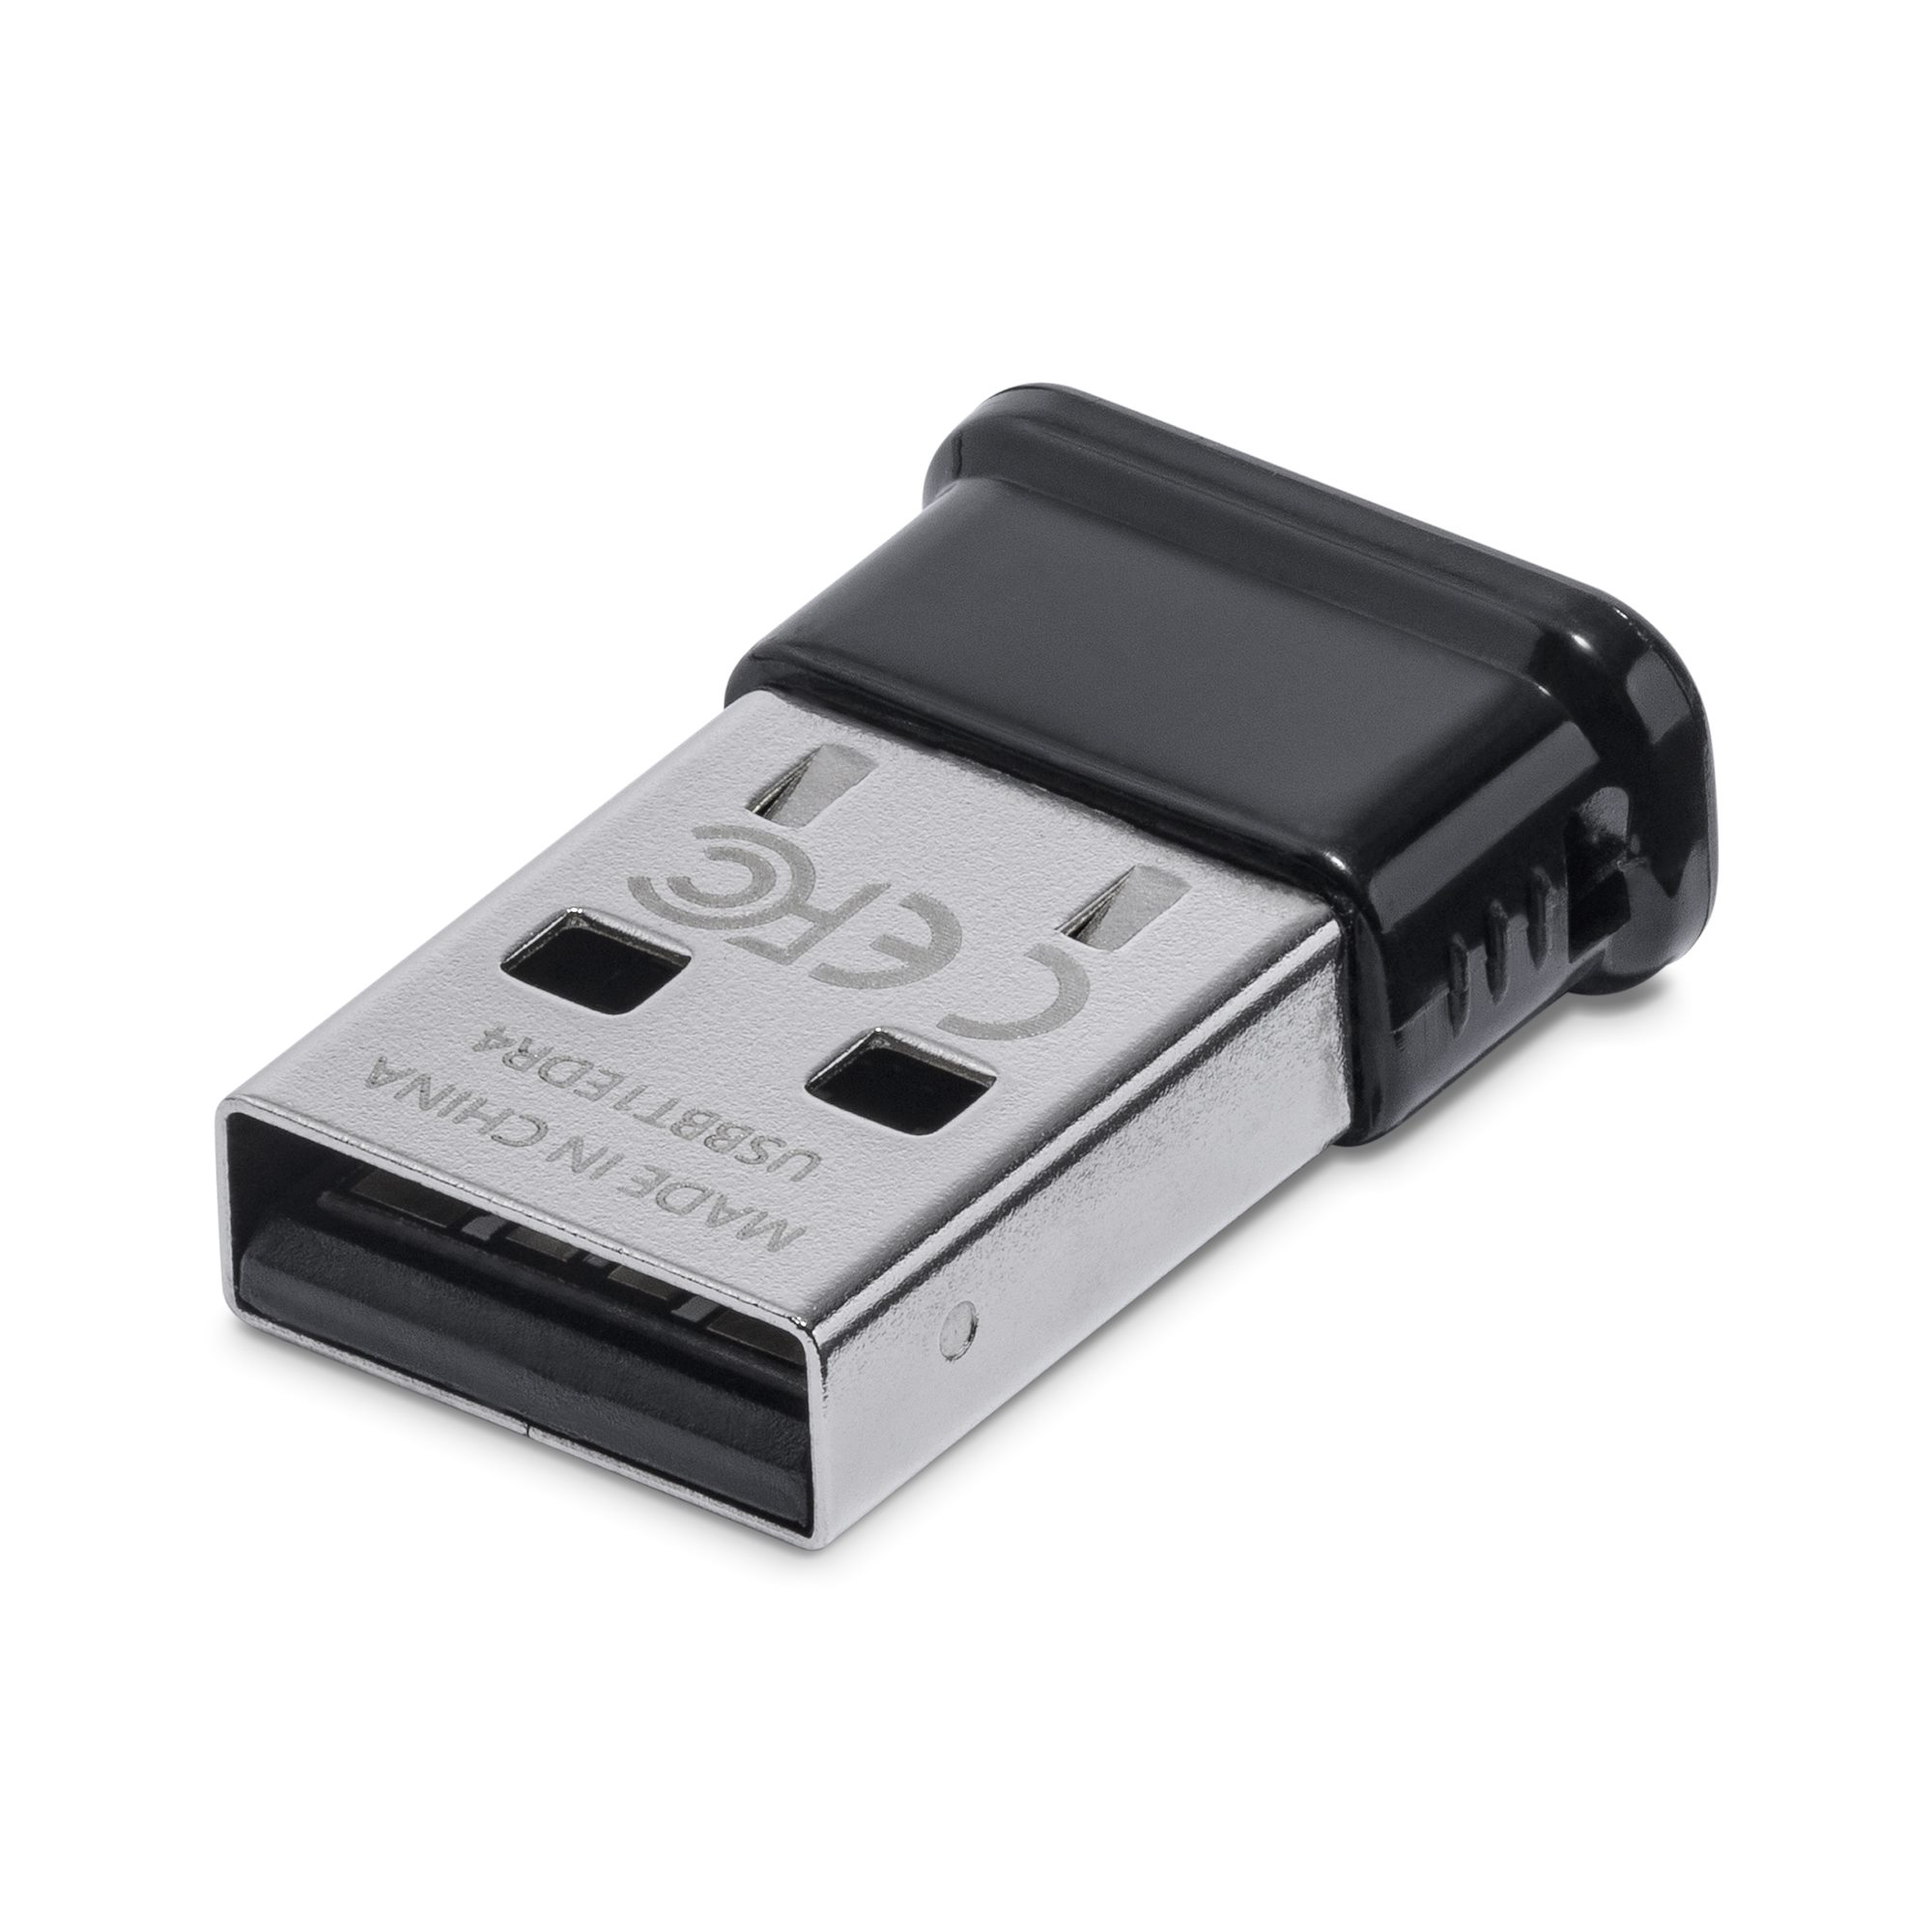 Mini USB Bluetooth 4.0 Dongle - 50m - Bluetooth & Telecom Adapters, Networking IO Products